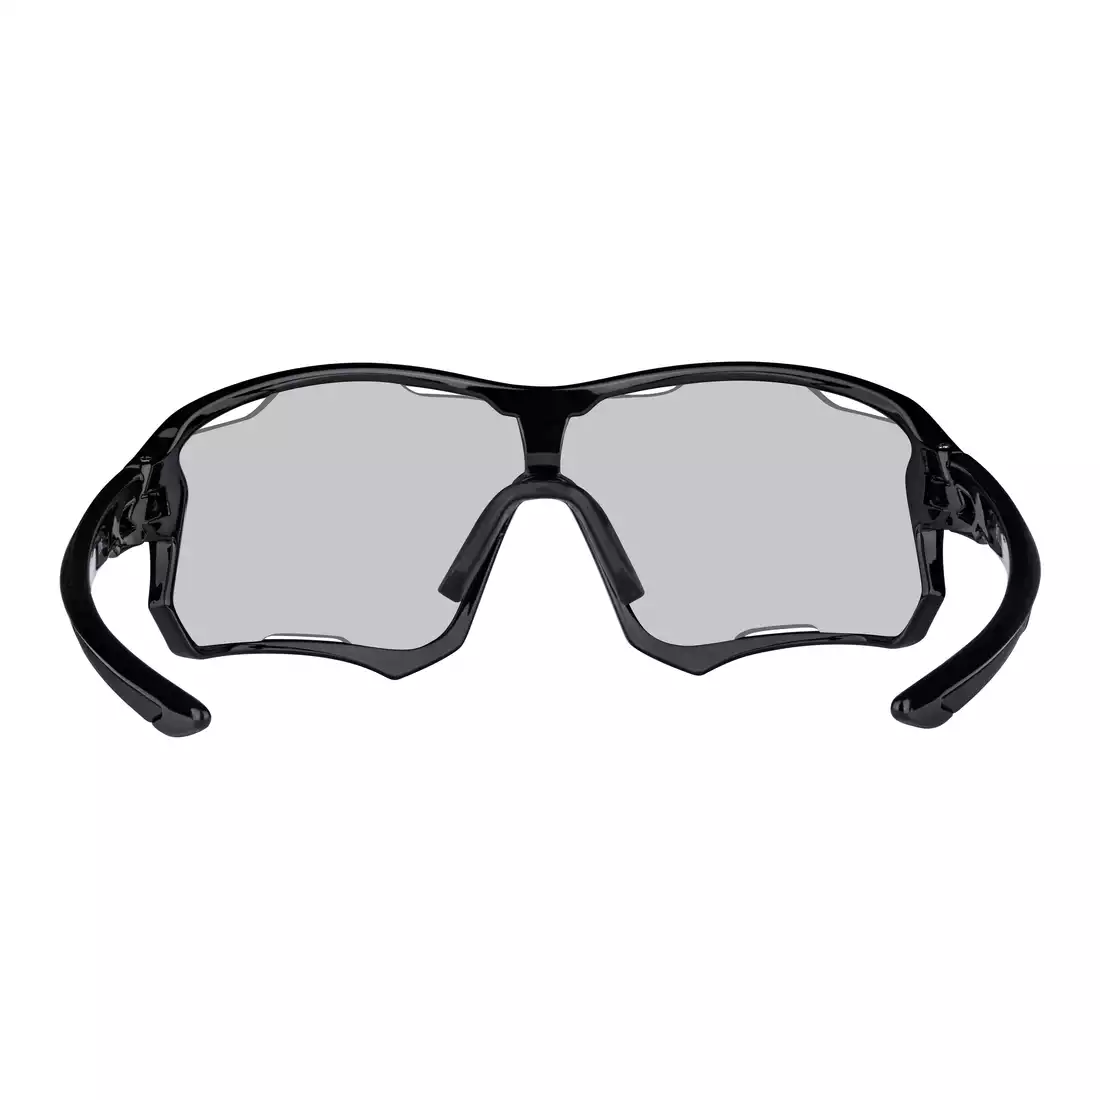 FORCE EDIE Photochromic sports glasses, black